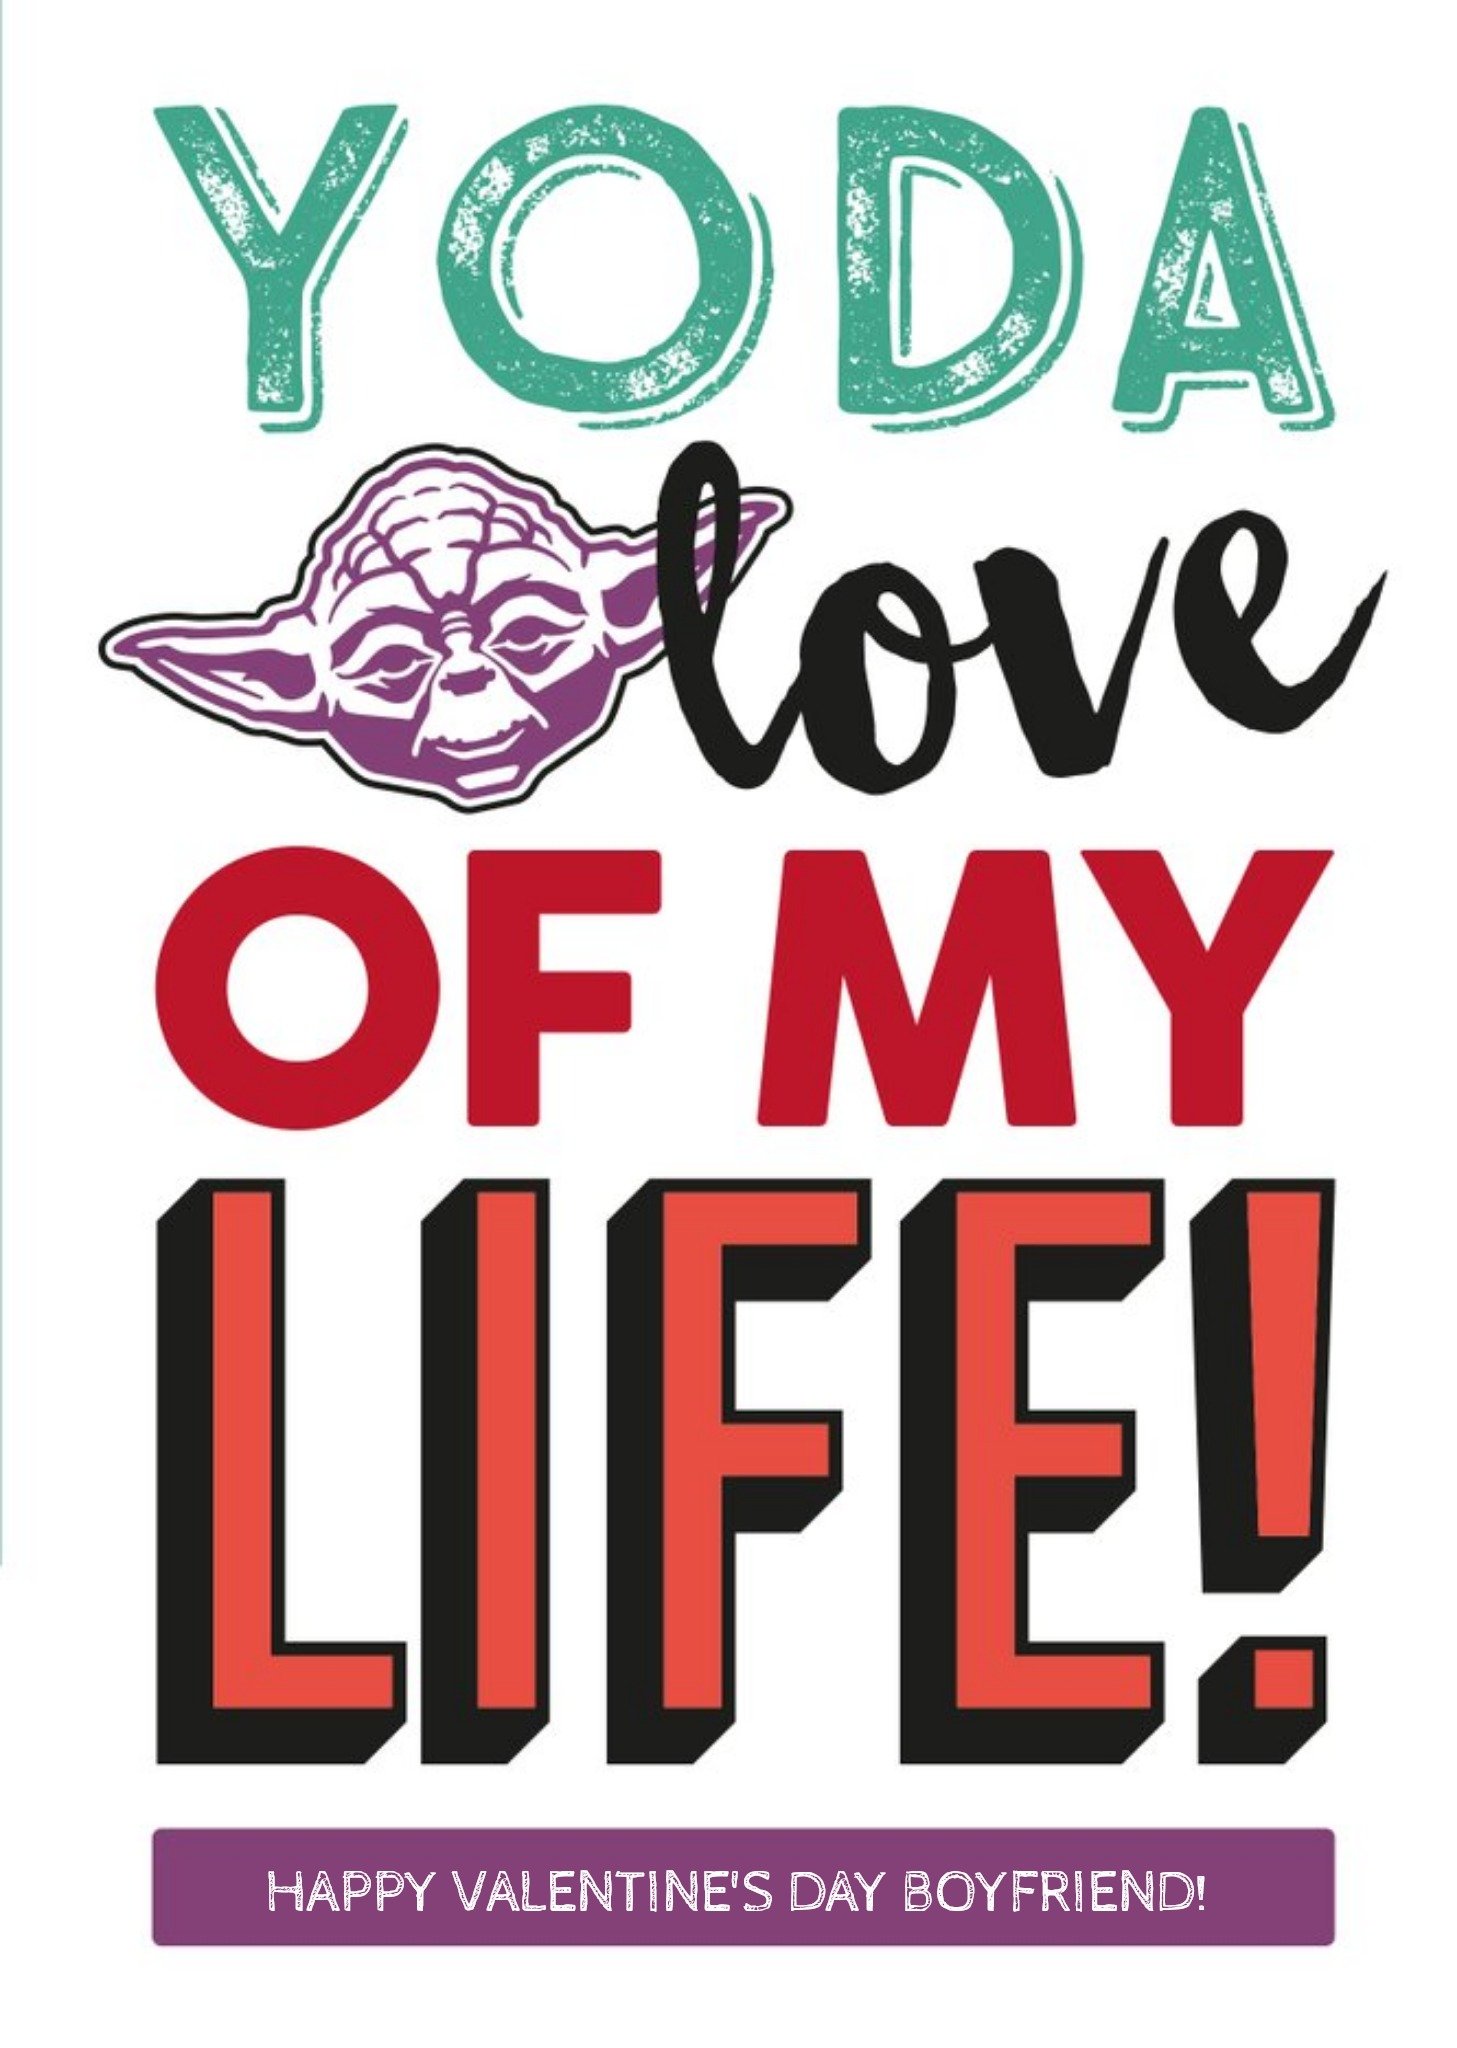 Disney Star Wars Yoda Love Of My Life Valentine's Day Boyfriend Card Ecard